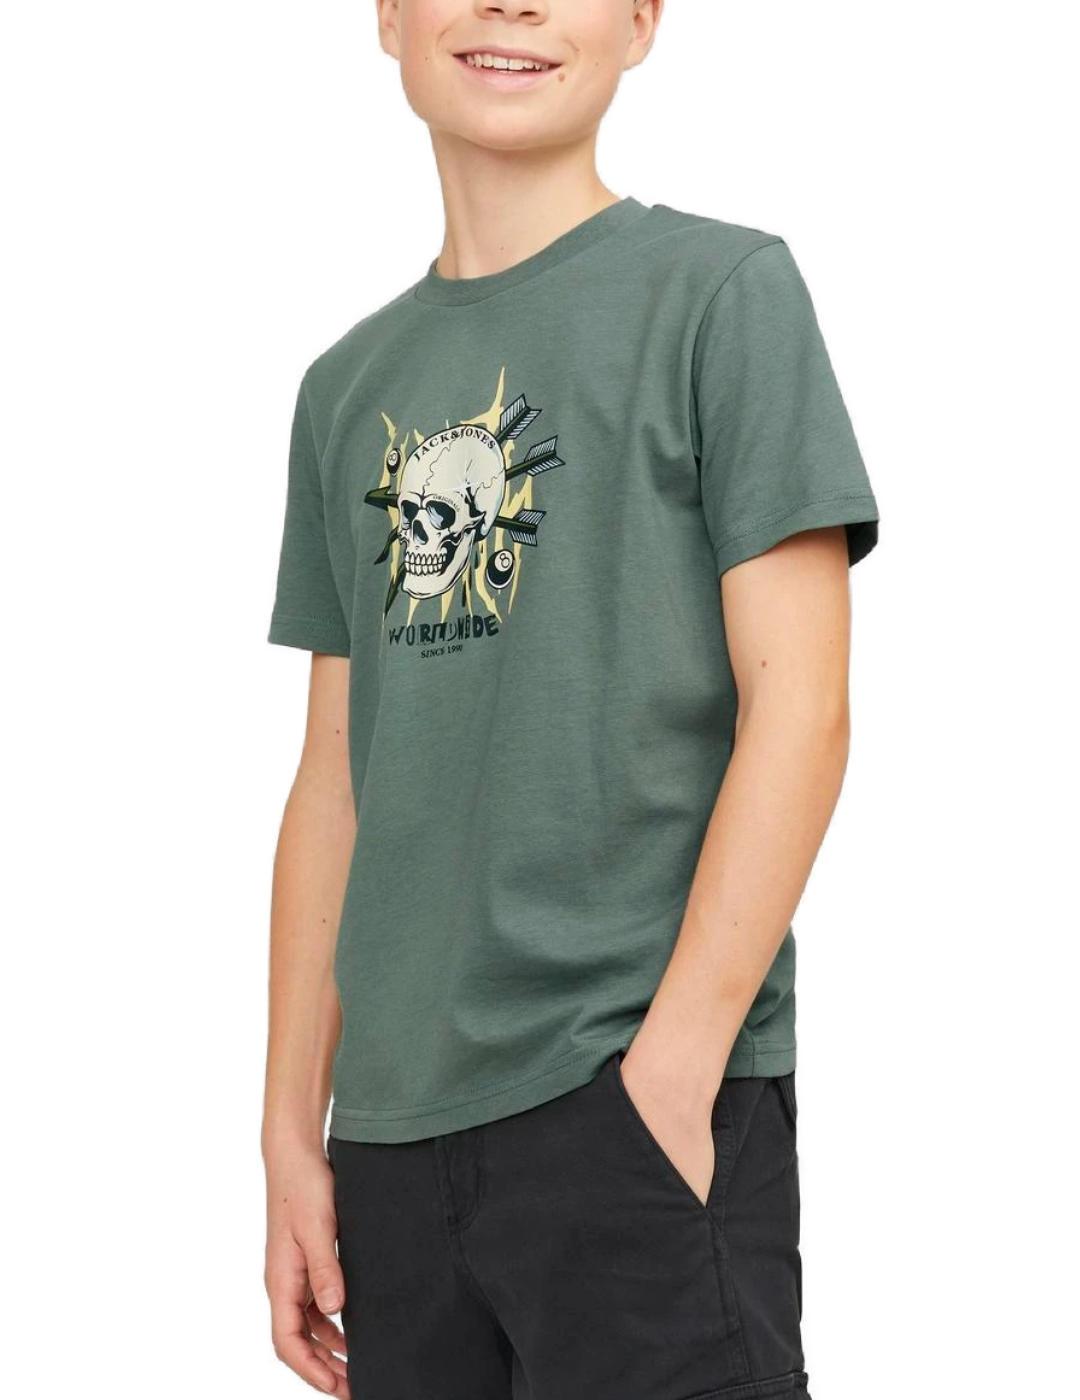 Camiseta Jack&Jones Junior verde manga corta para niño